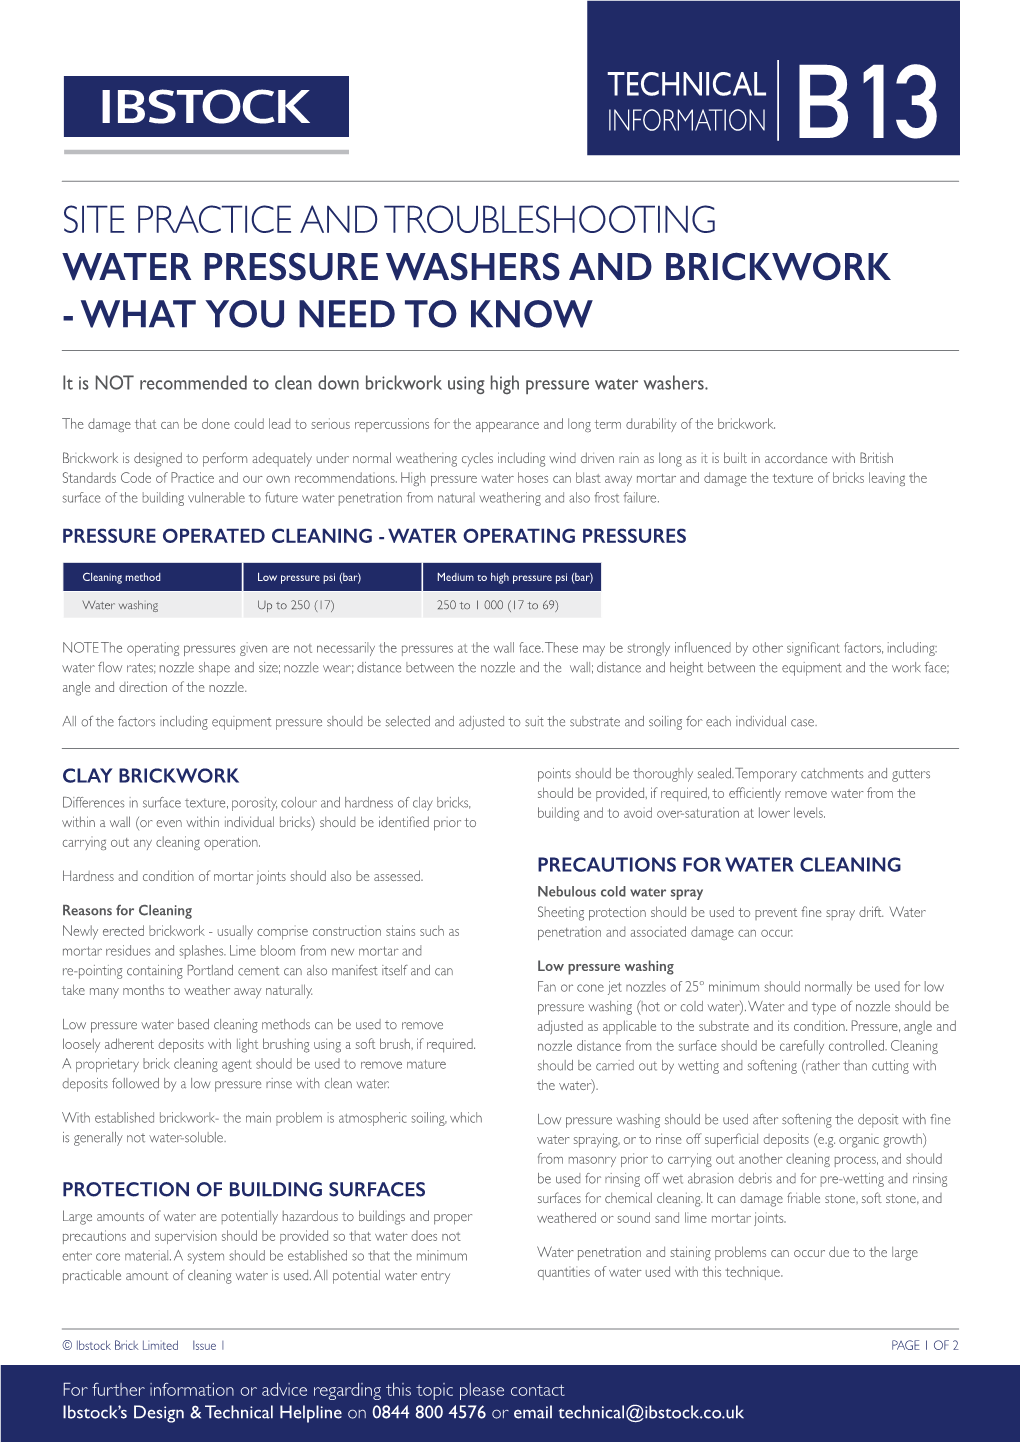 Tis B13 Water Pressure Washers and Brickwork